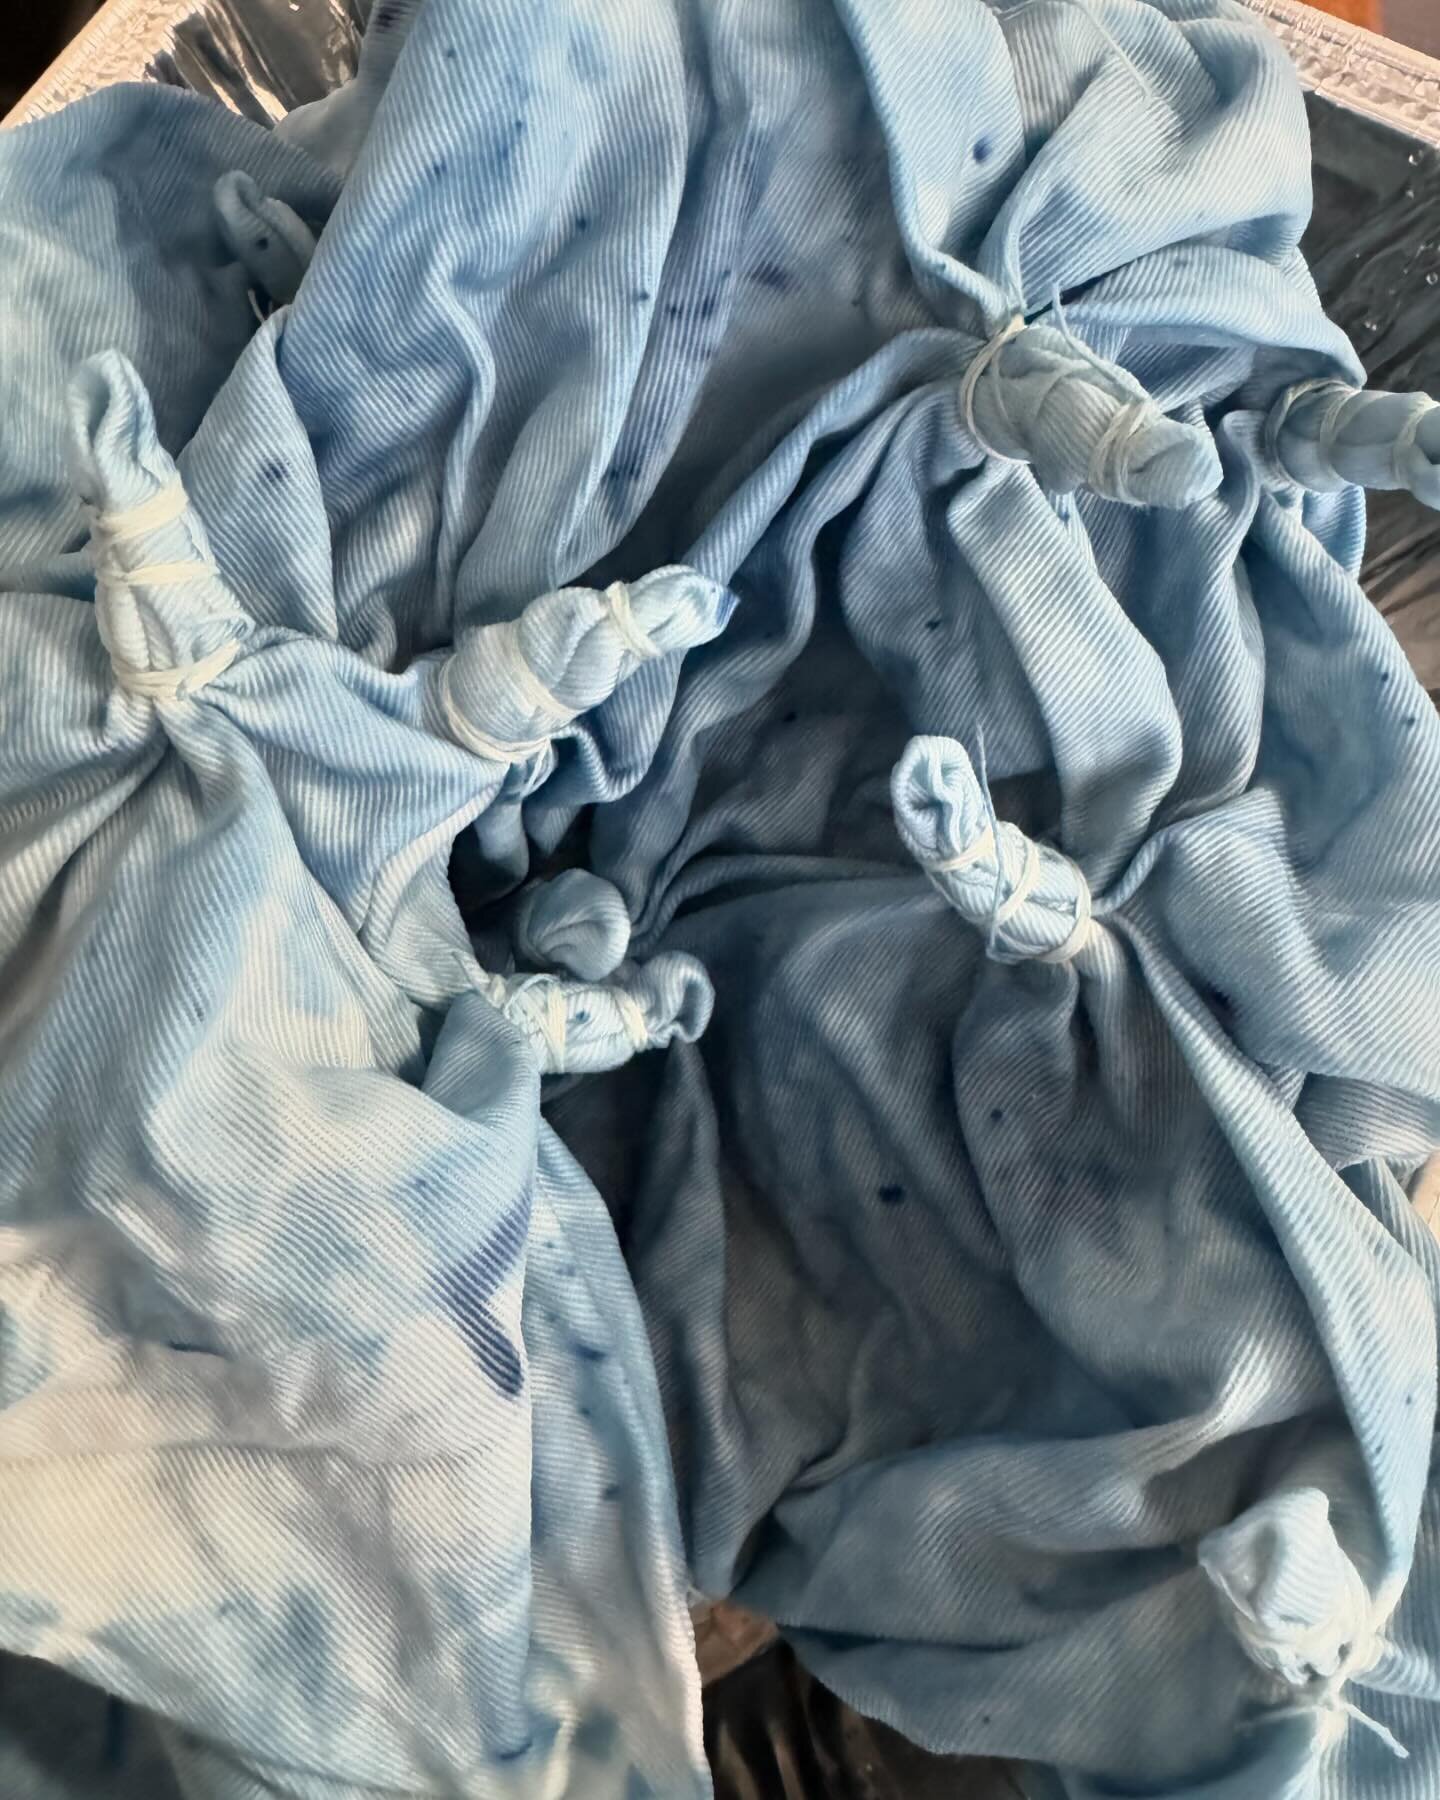 Experiment of Shibori Looped-Binding Technique with Indigo dye. 😀😀.
.
.
.
#kmhats #karenmorrismillinery #shibori #miura #dyeing #indigo #fabricart #binding #millinery #hatmaker #wearableart #textilecentermn #minnesota  #denim